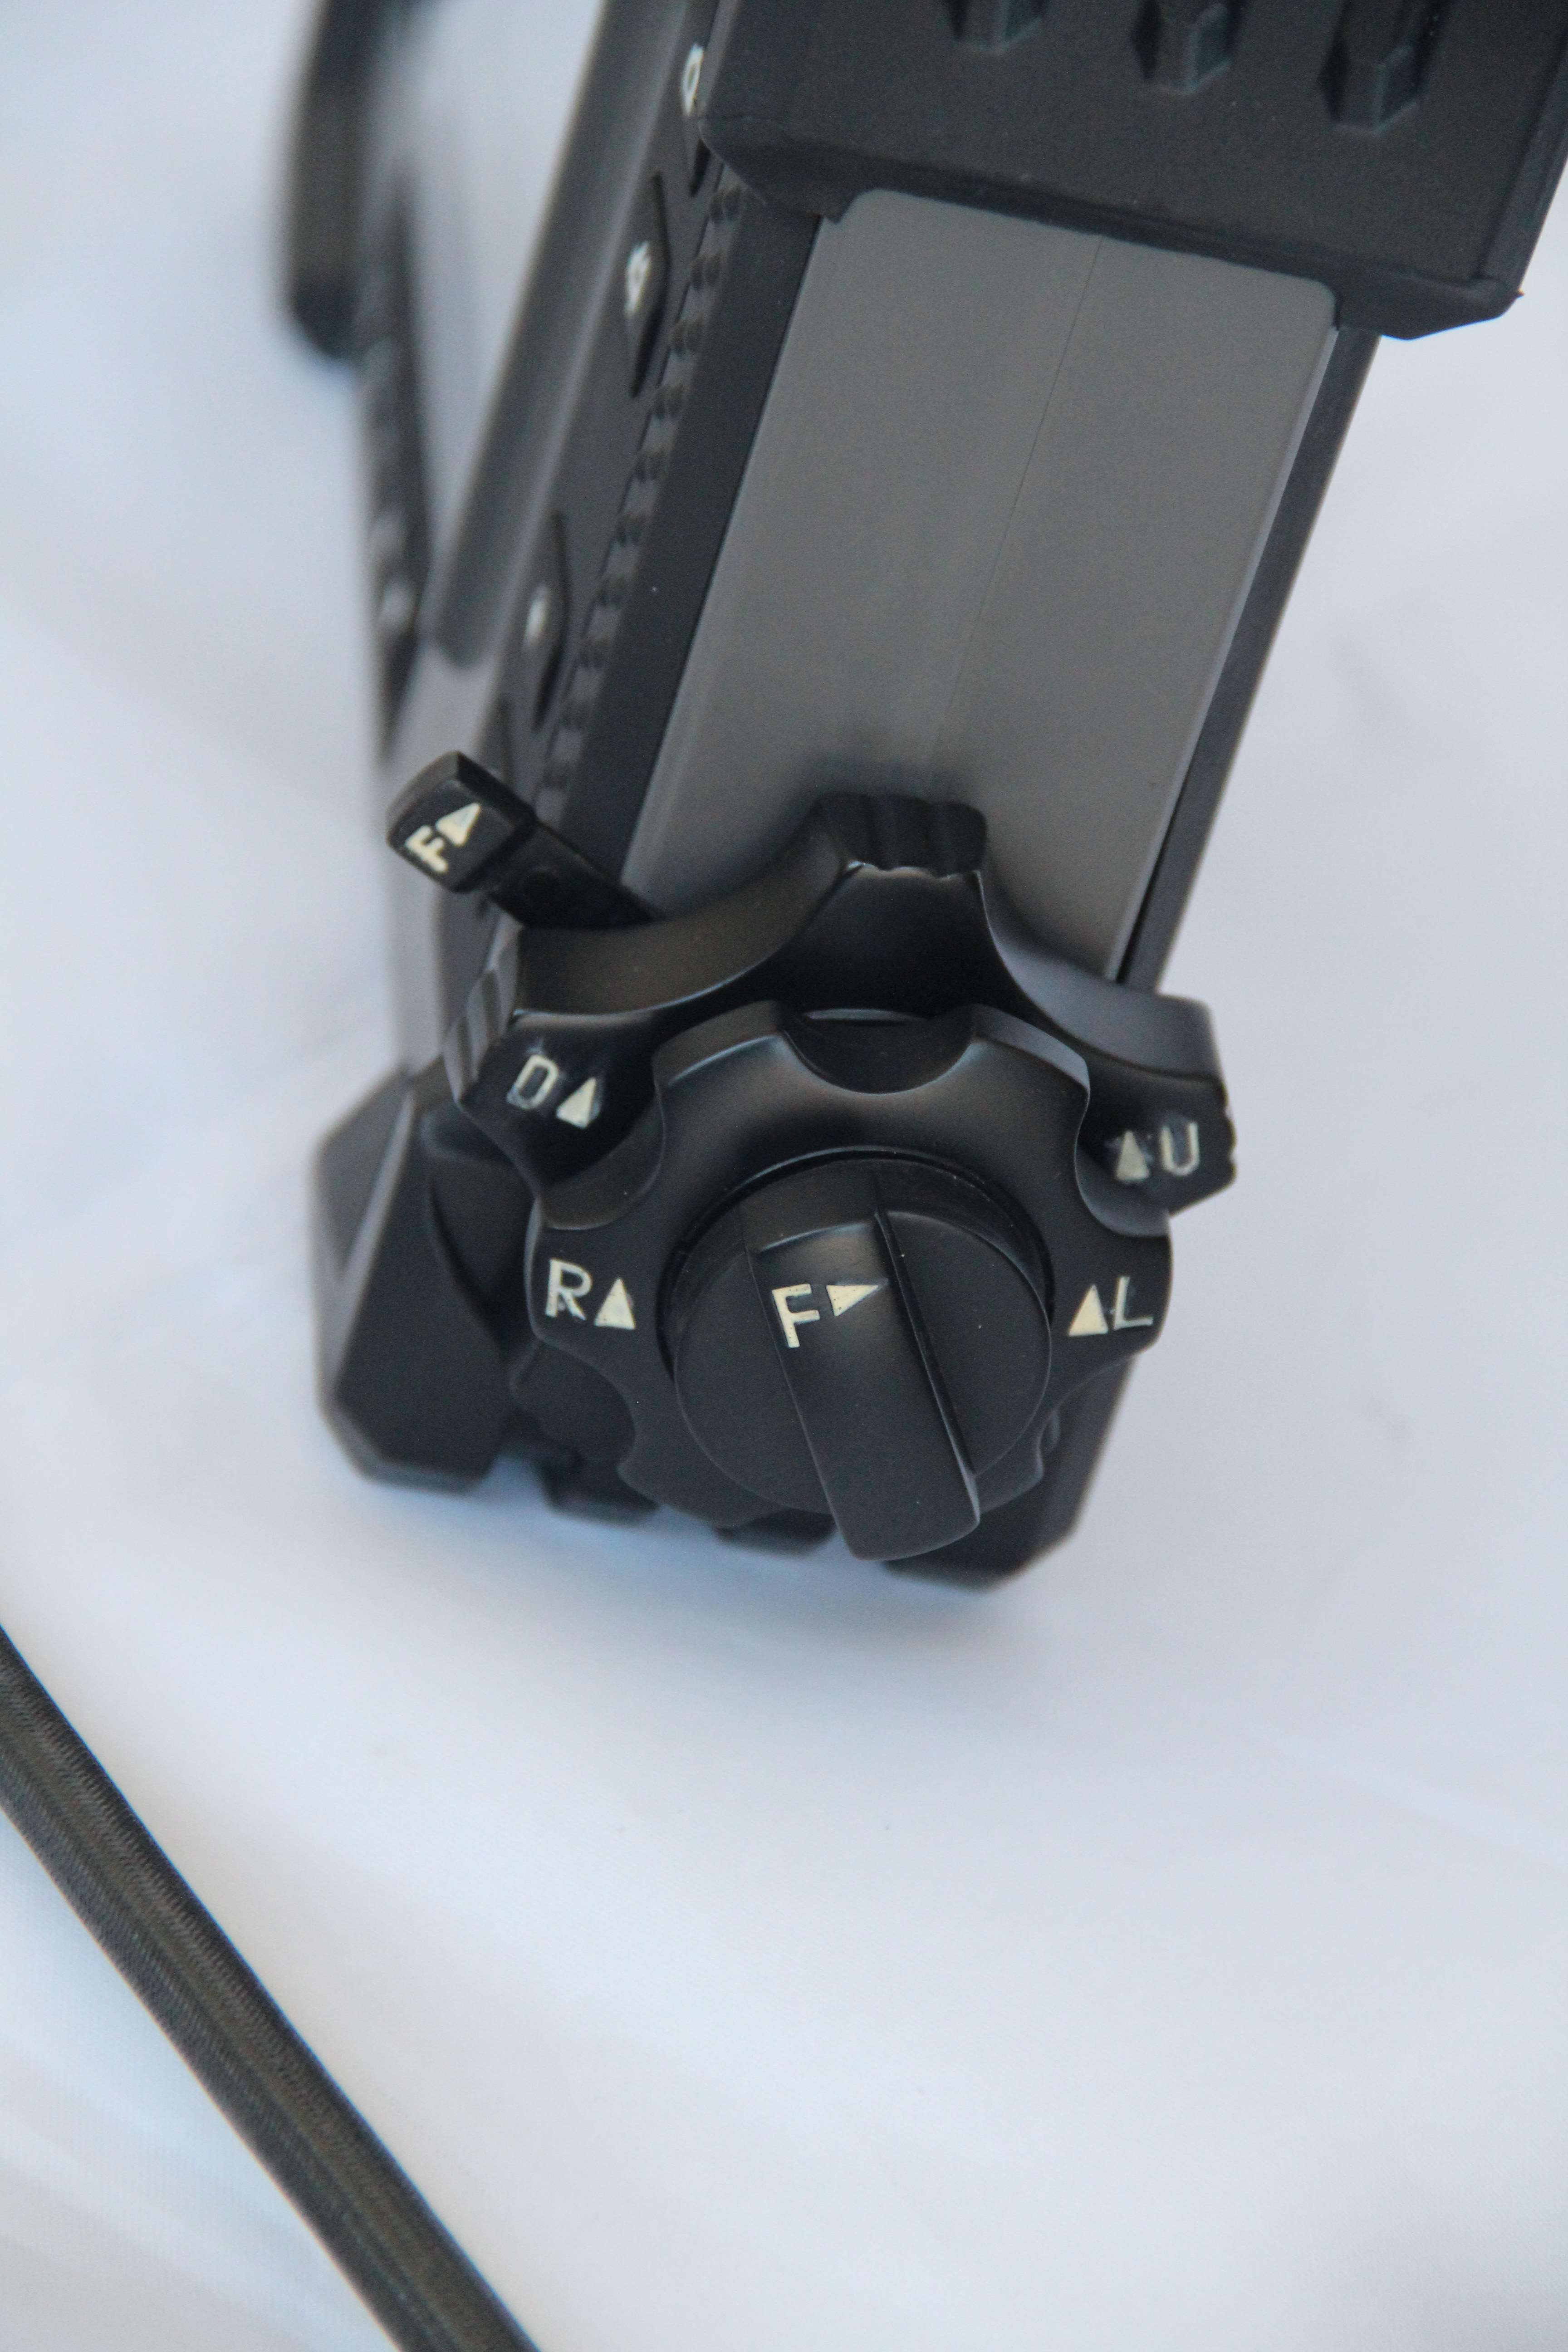 Flexible industrial borescope